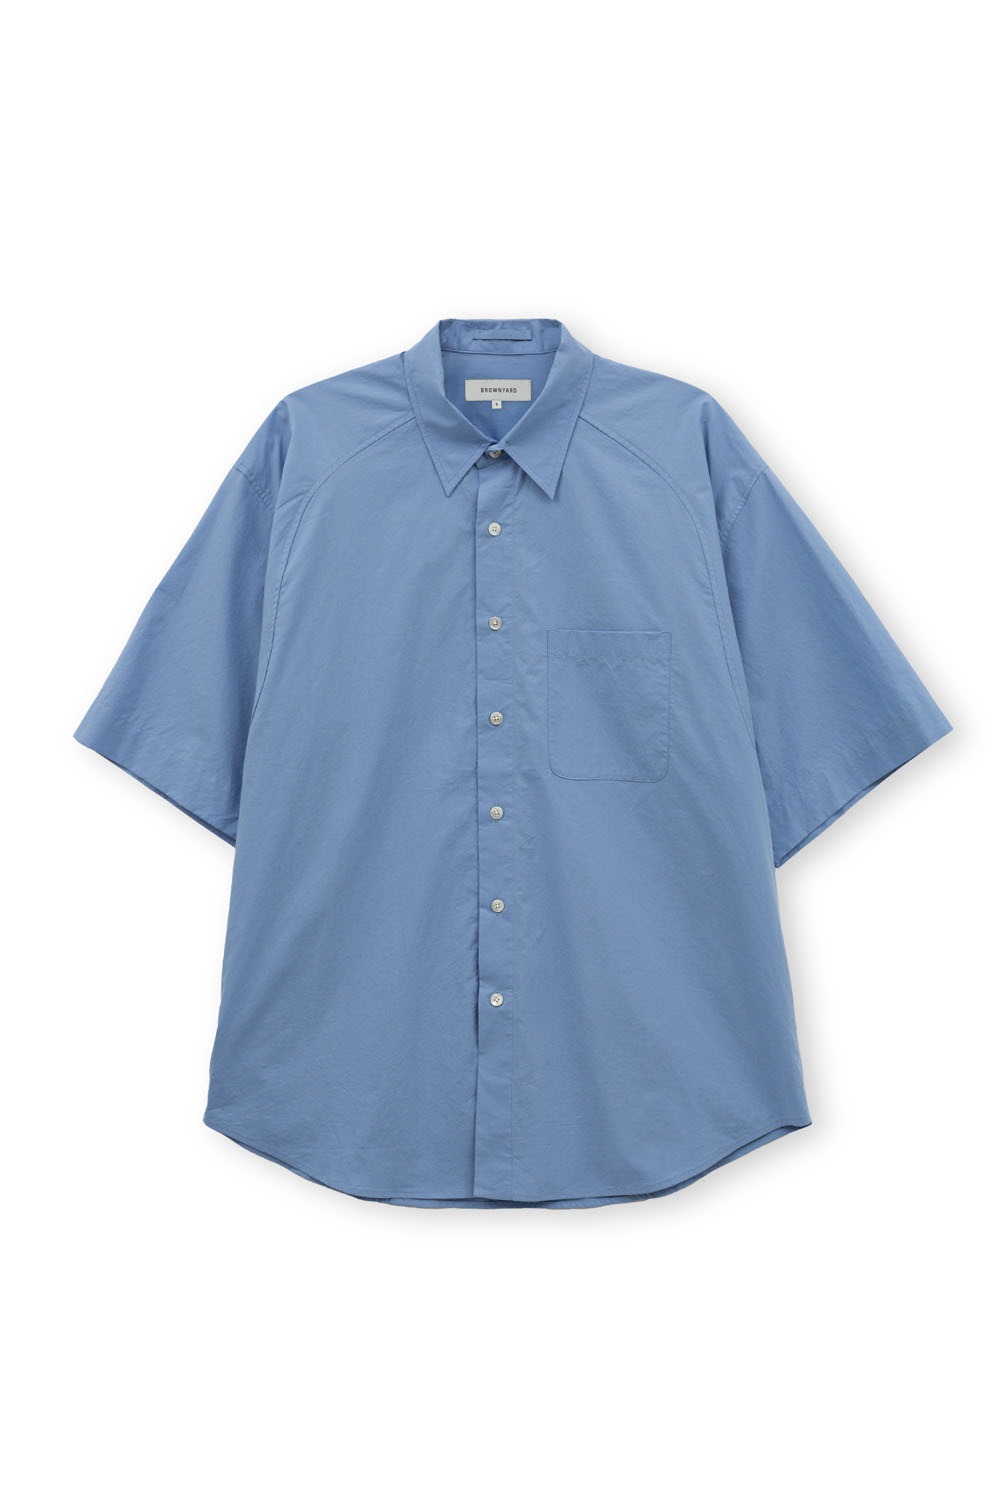 Half Shirt-Sax Blue